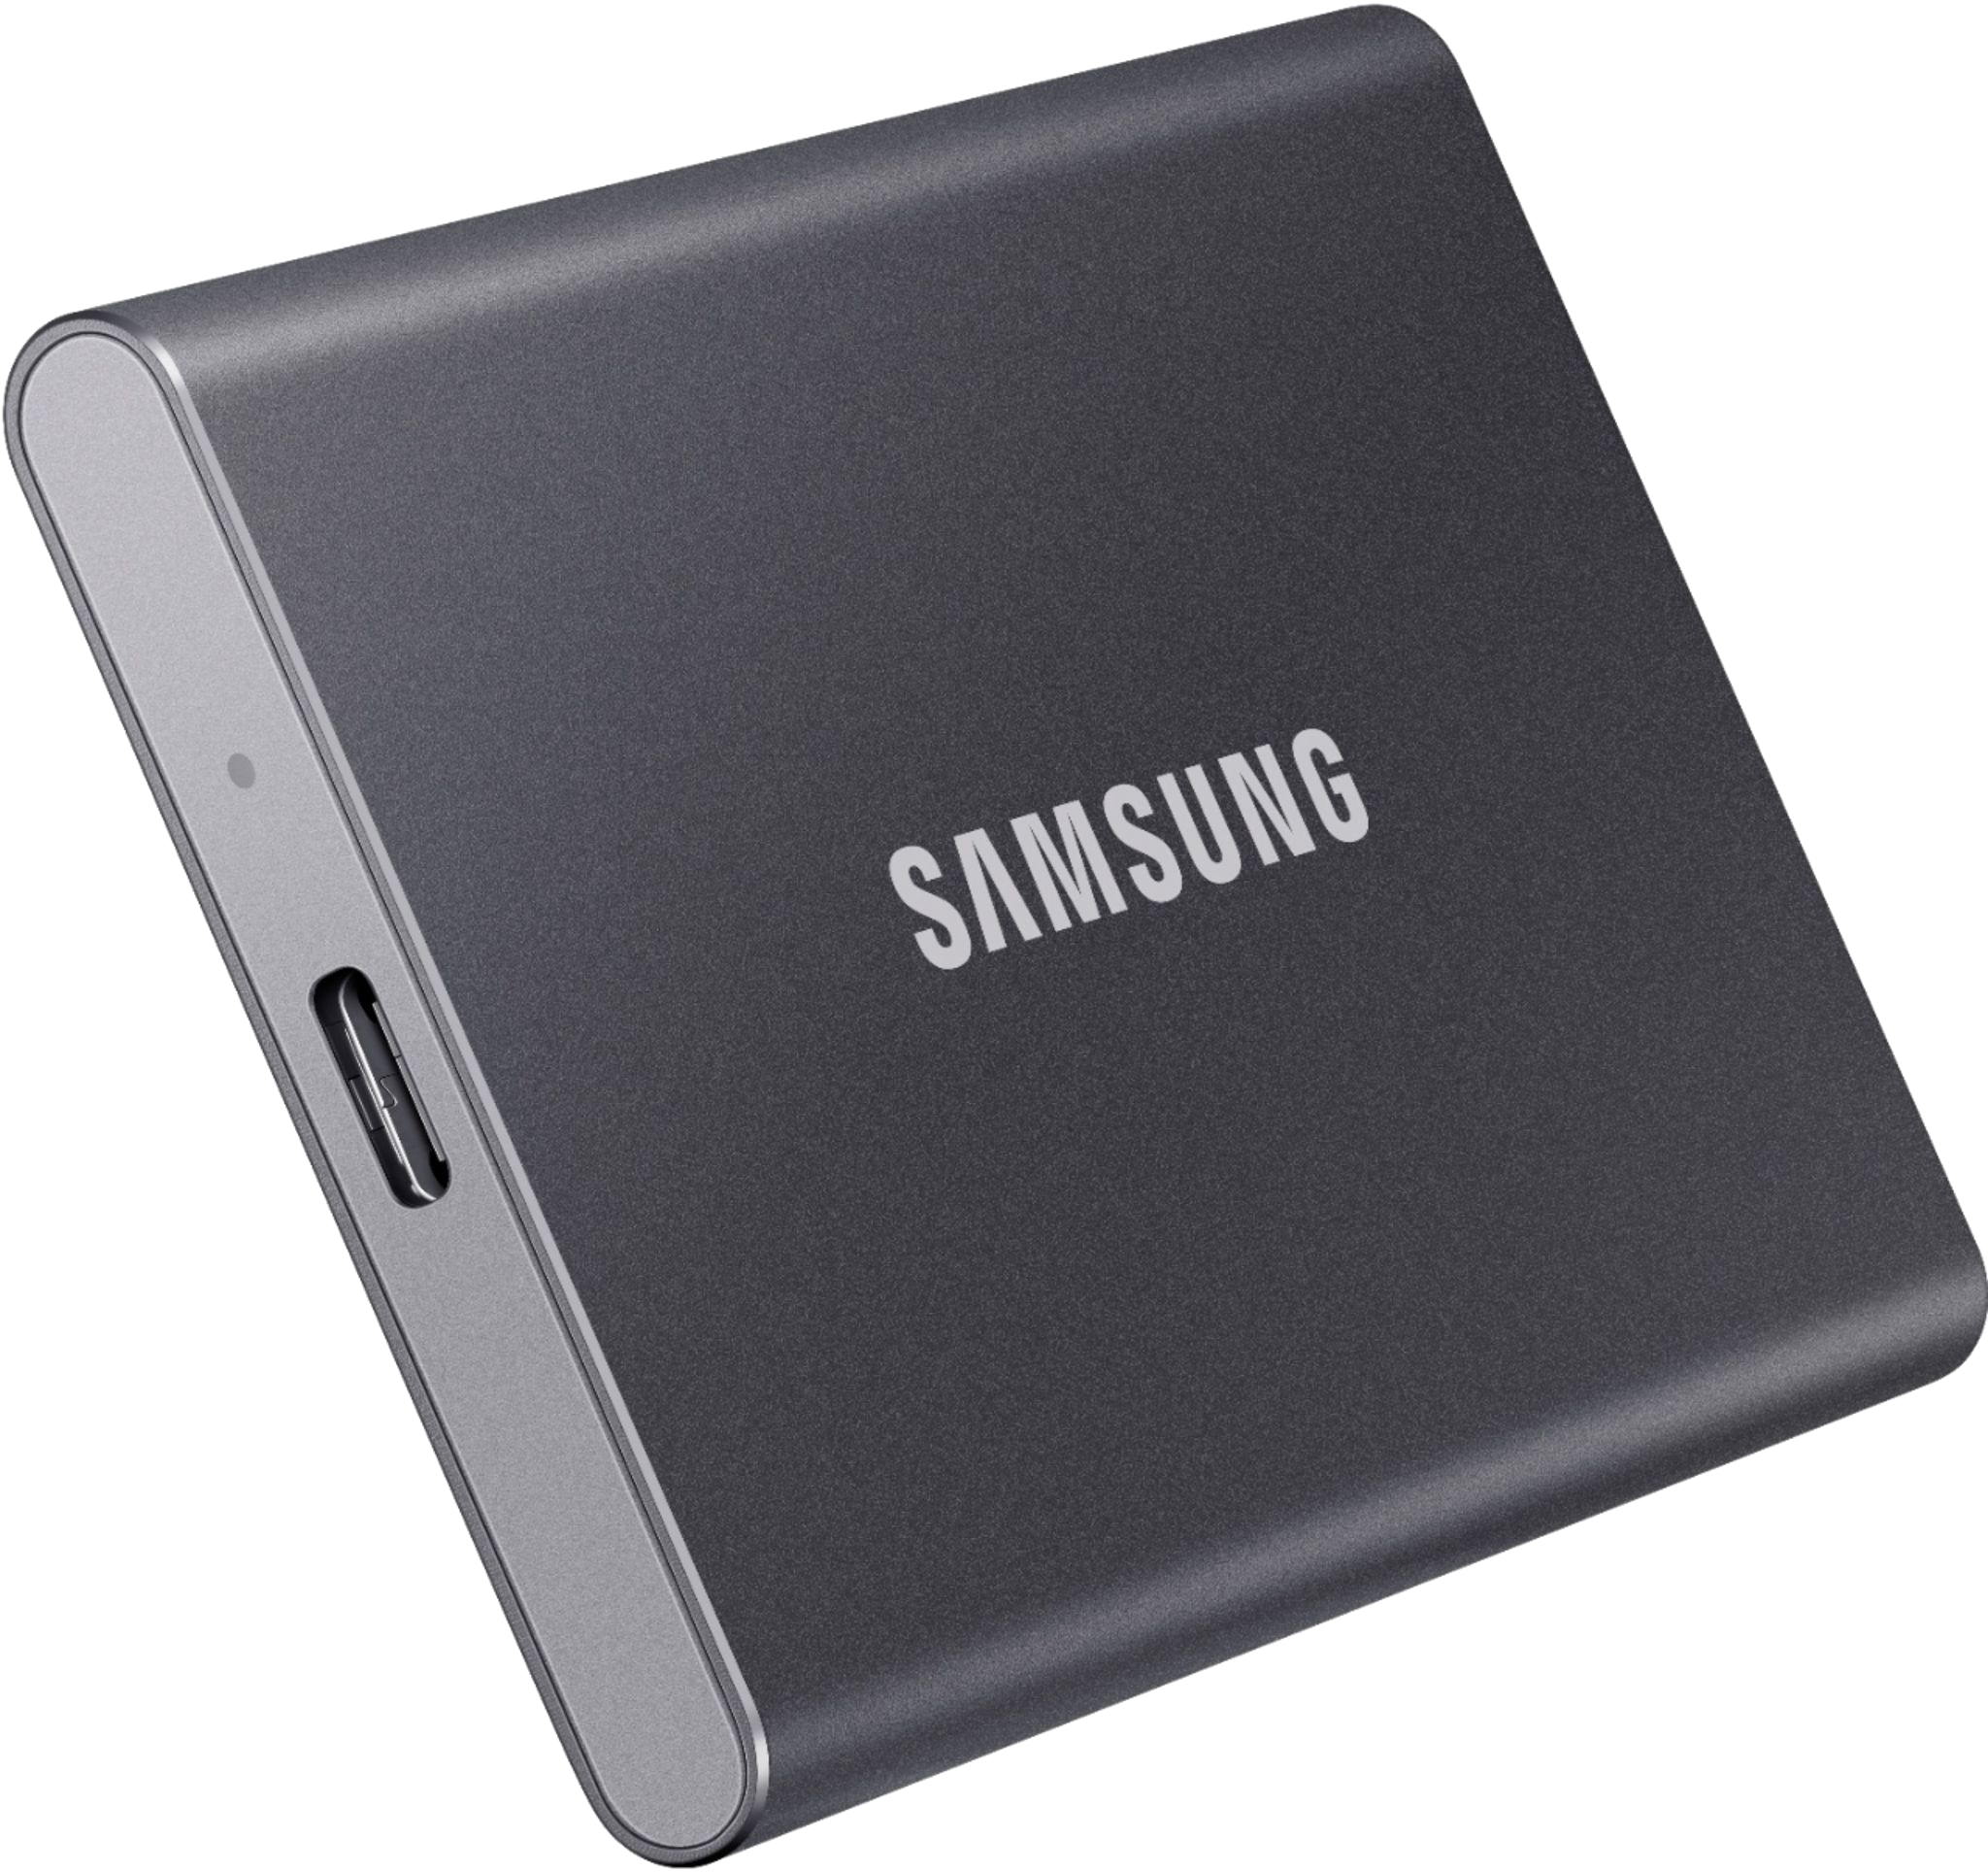 Samsung T7 500GB Portable SSD